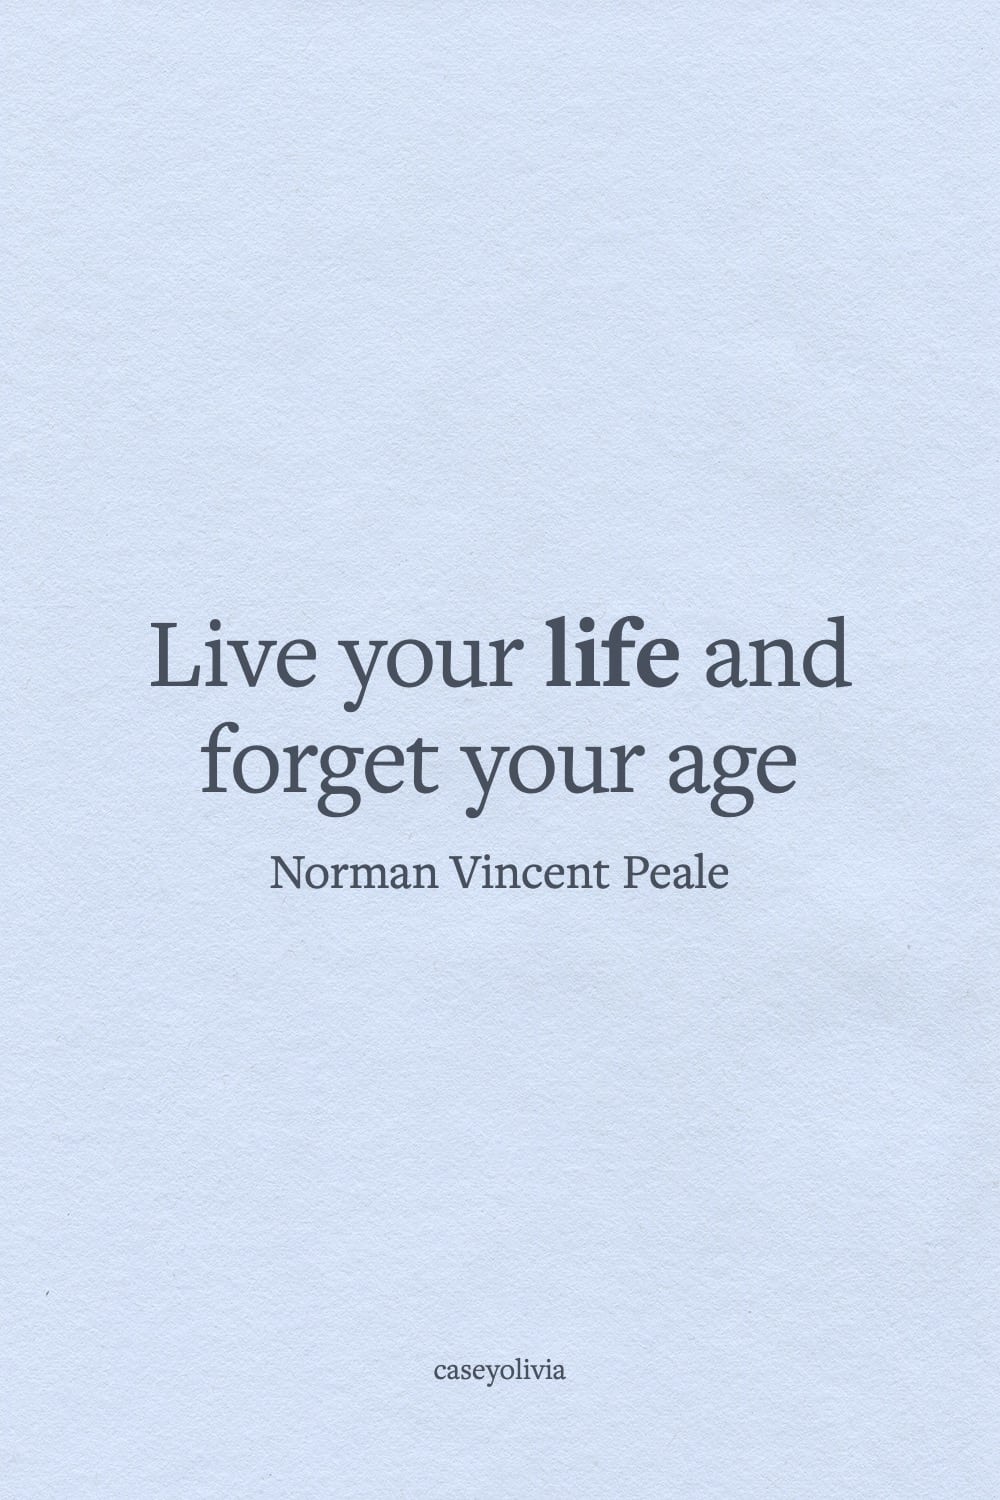 norman vincent peale live your life inspiring caption